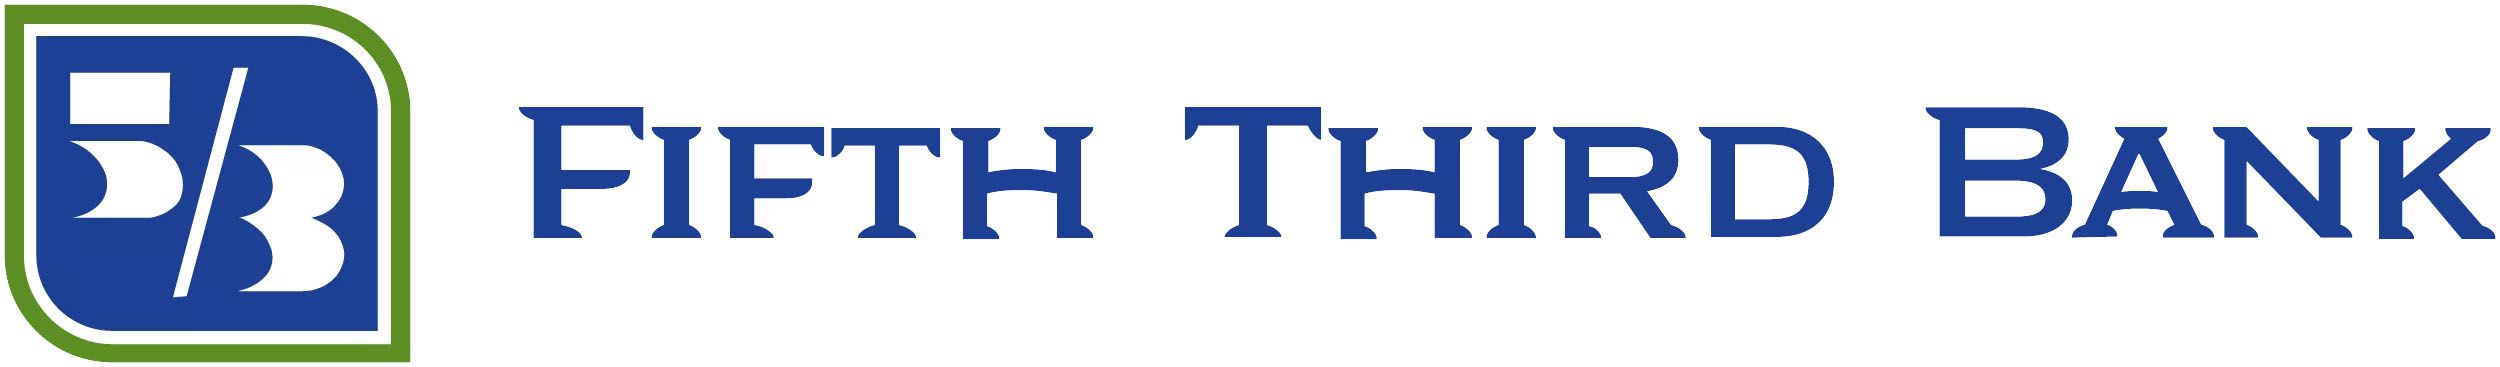 fifth third logo